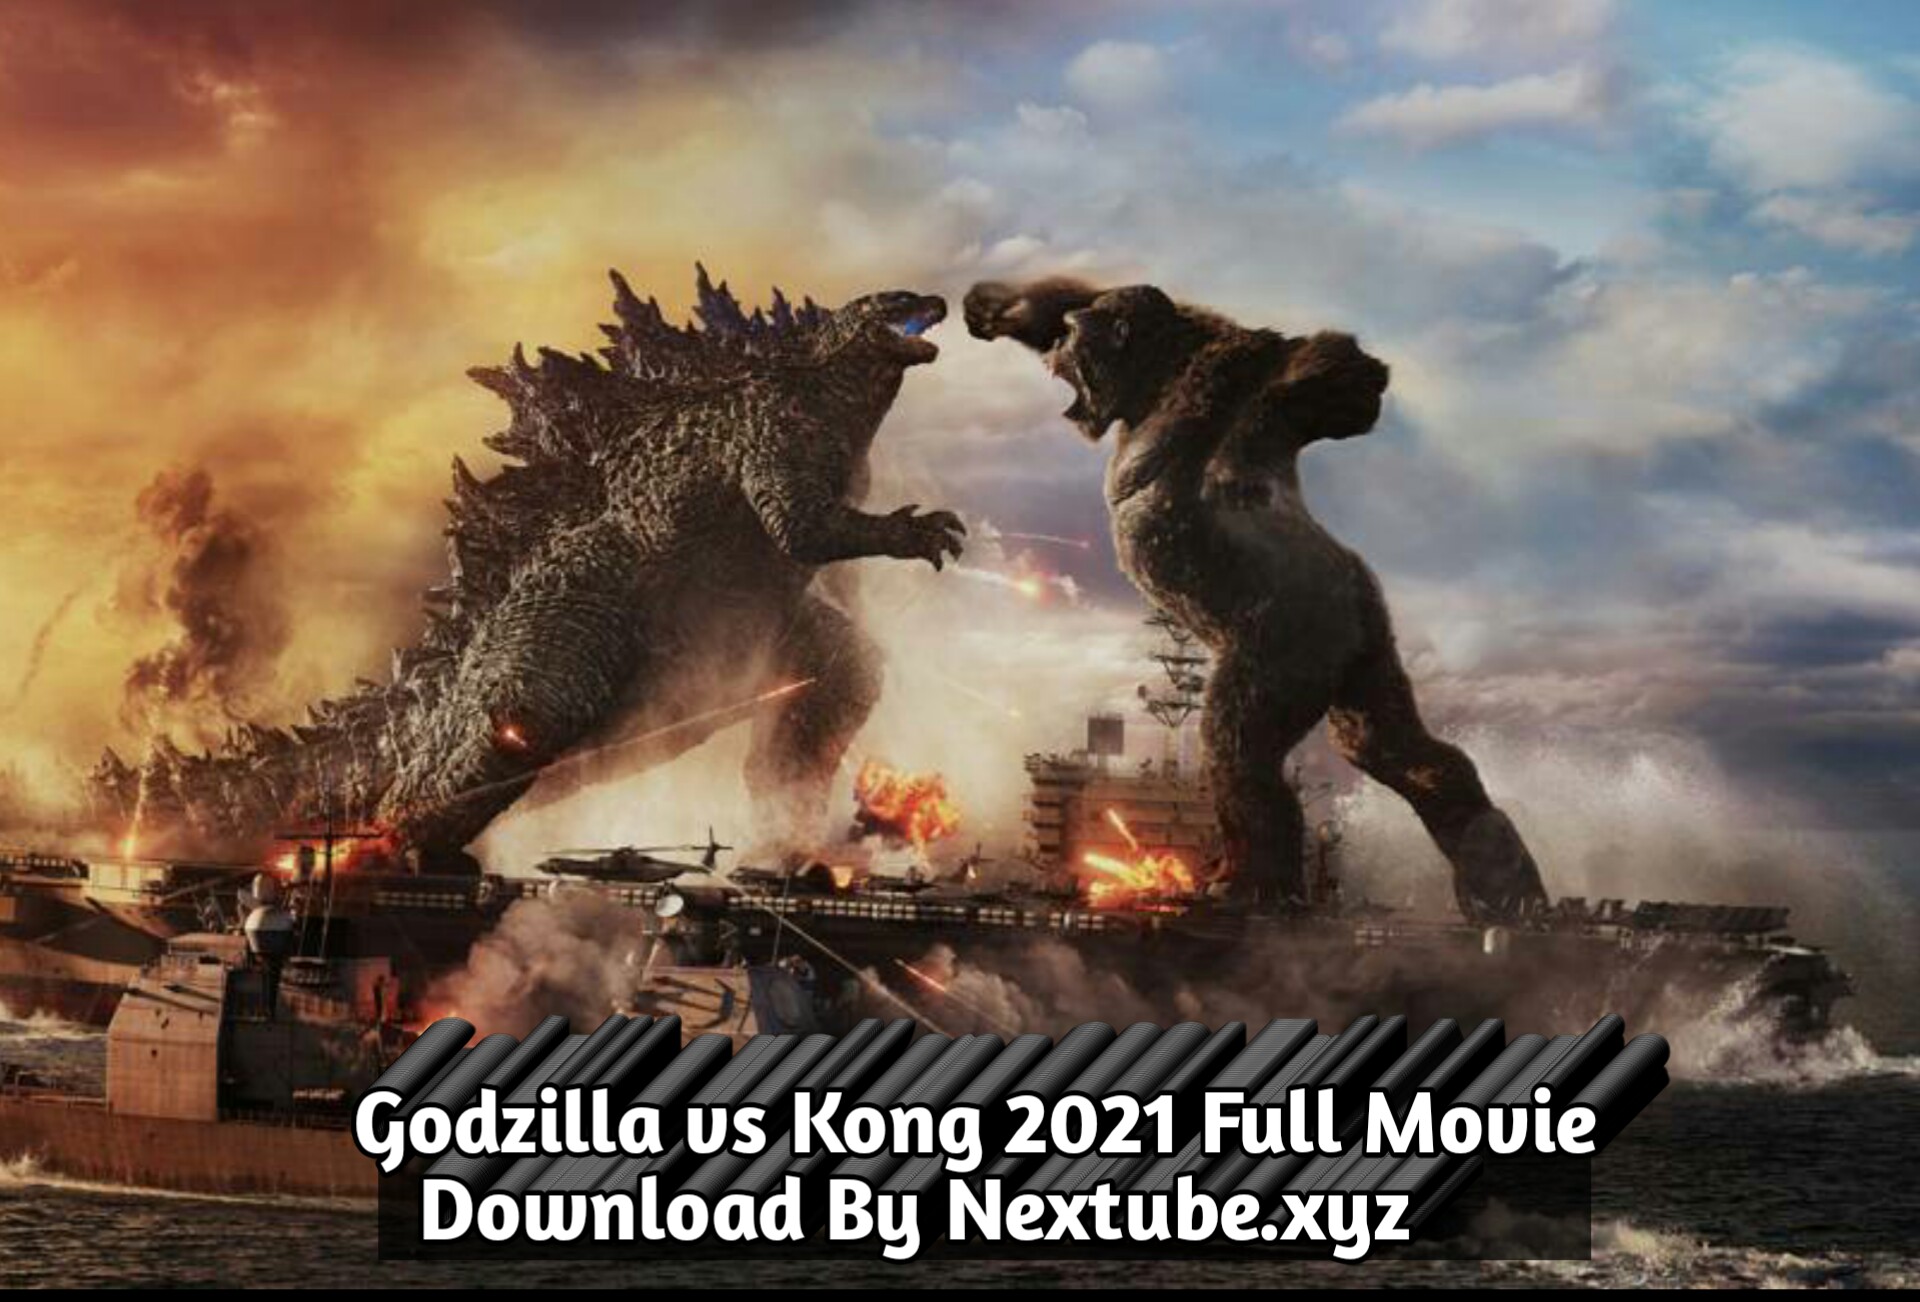 Godzilla vs Kong 2021 full movie Download Nextube.xyz